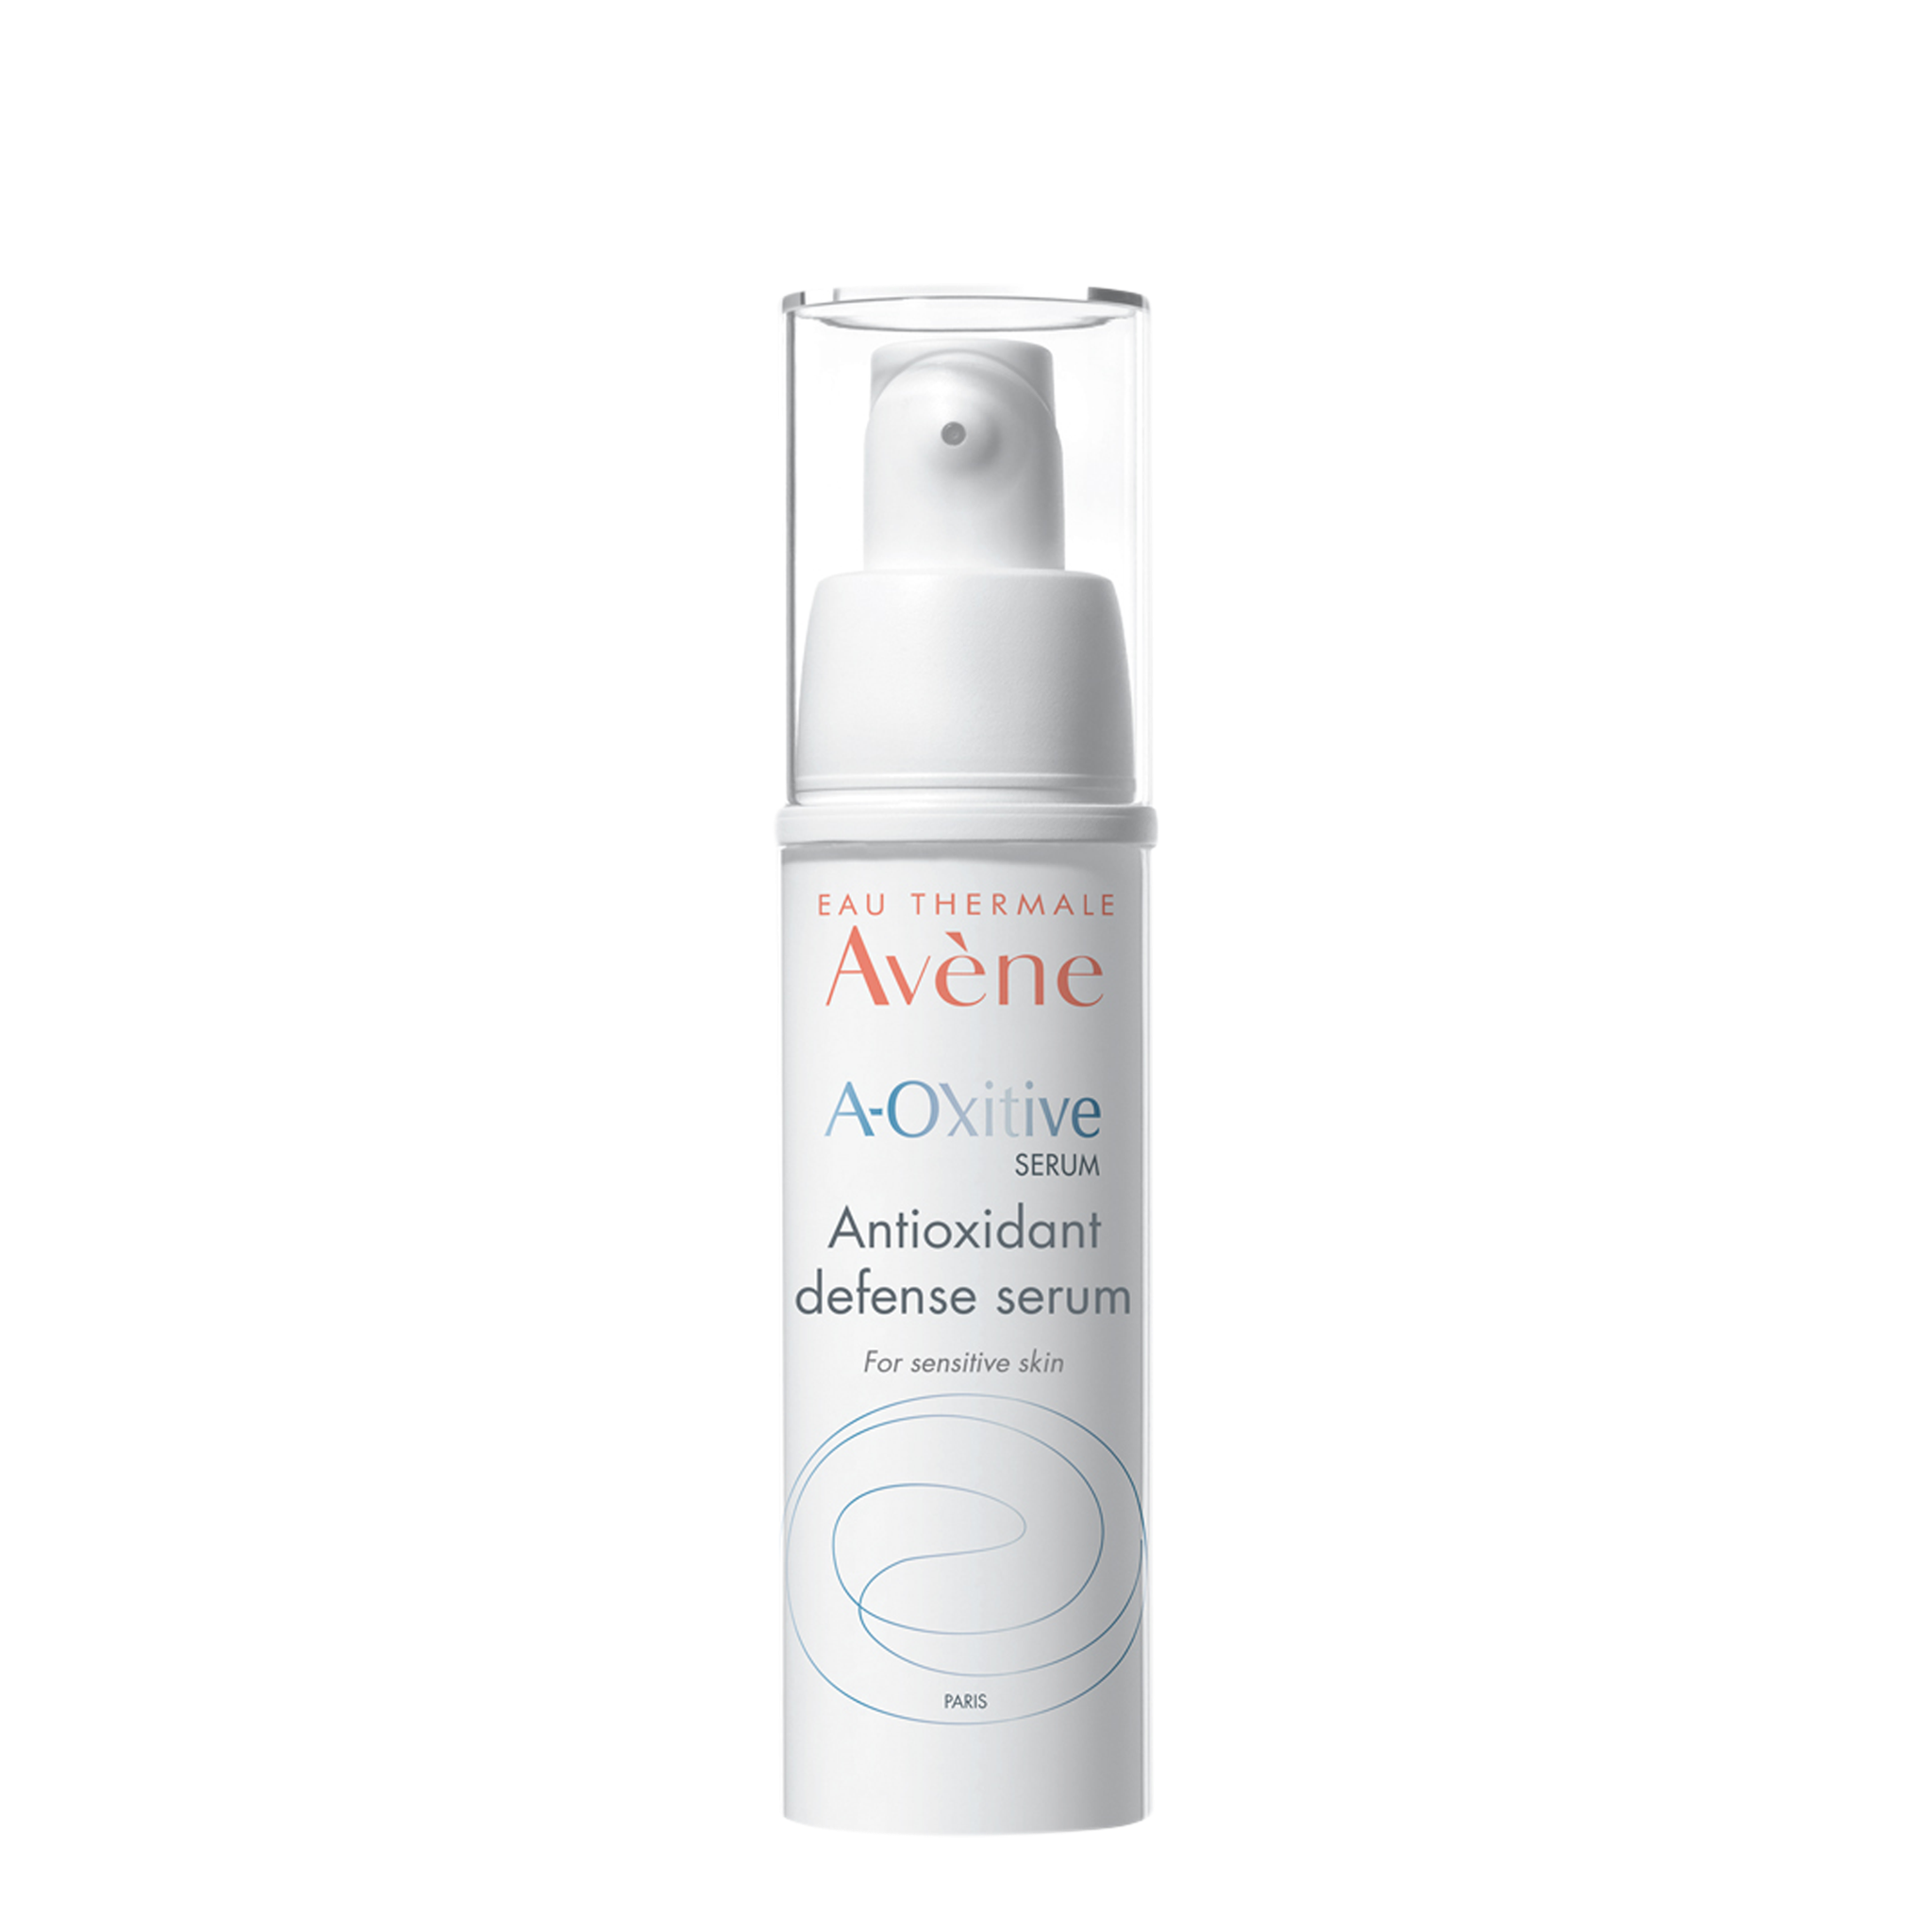 Avène A-Oxitive Antioxidant Defence Serum 30ml - Vitamin C Serum for Sensitive Skin